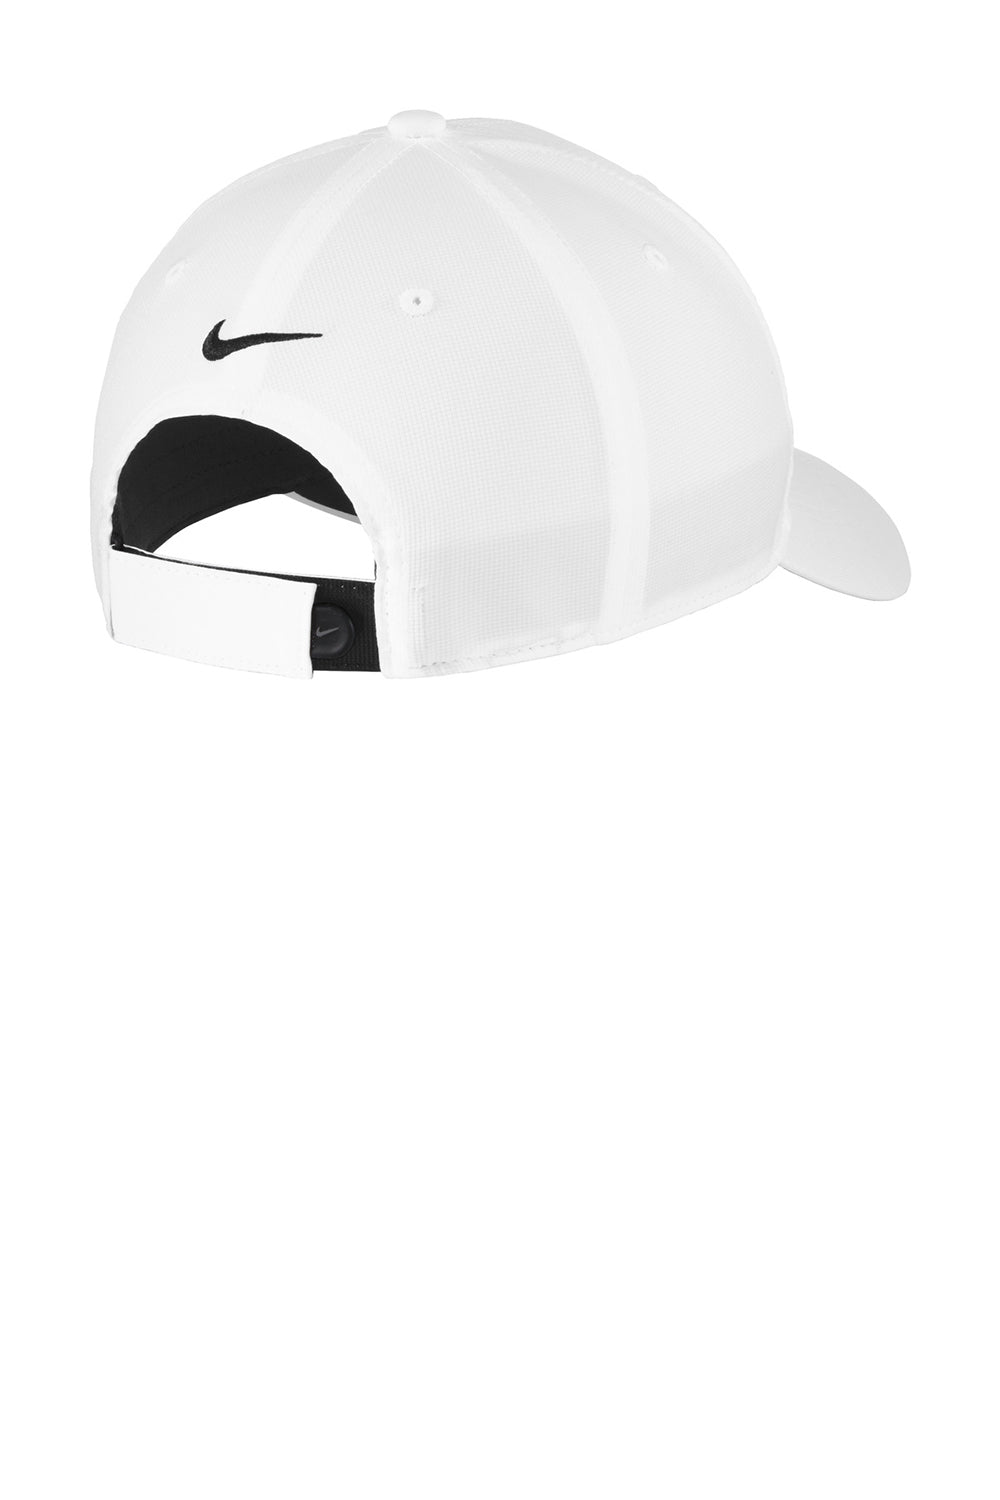 Nike NKAA1859/NKFB6444  Dri-Fit Moisture Wicking Adjustable Hat White/Black Flat Back